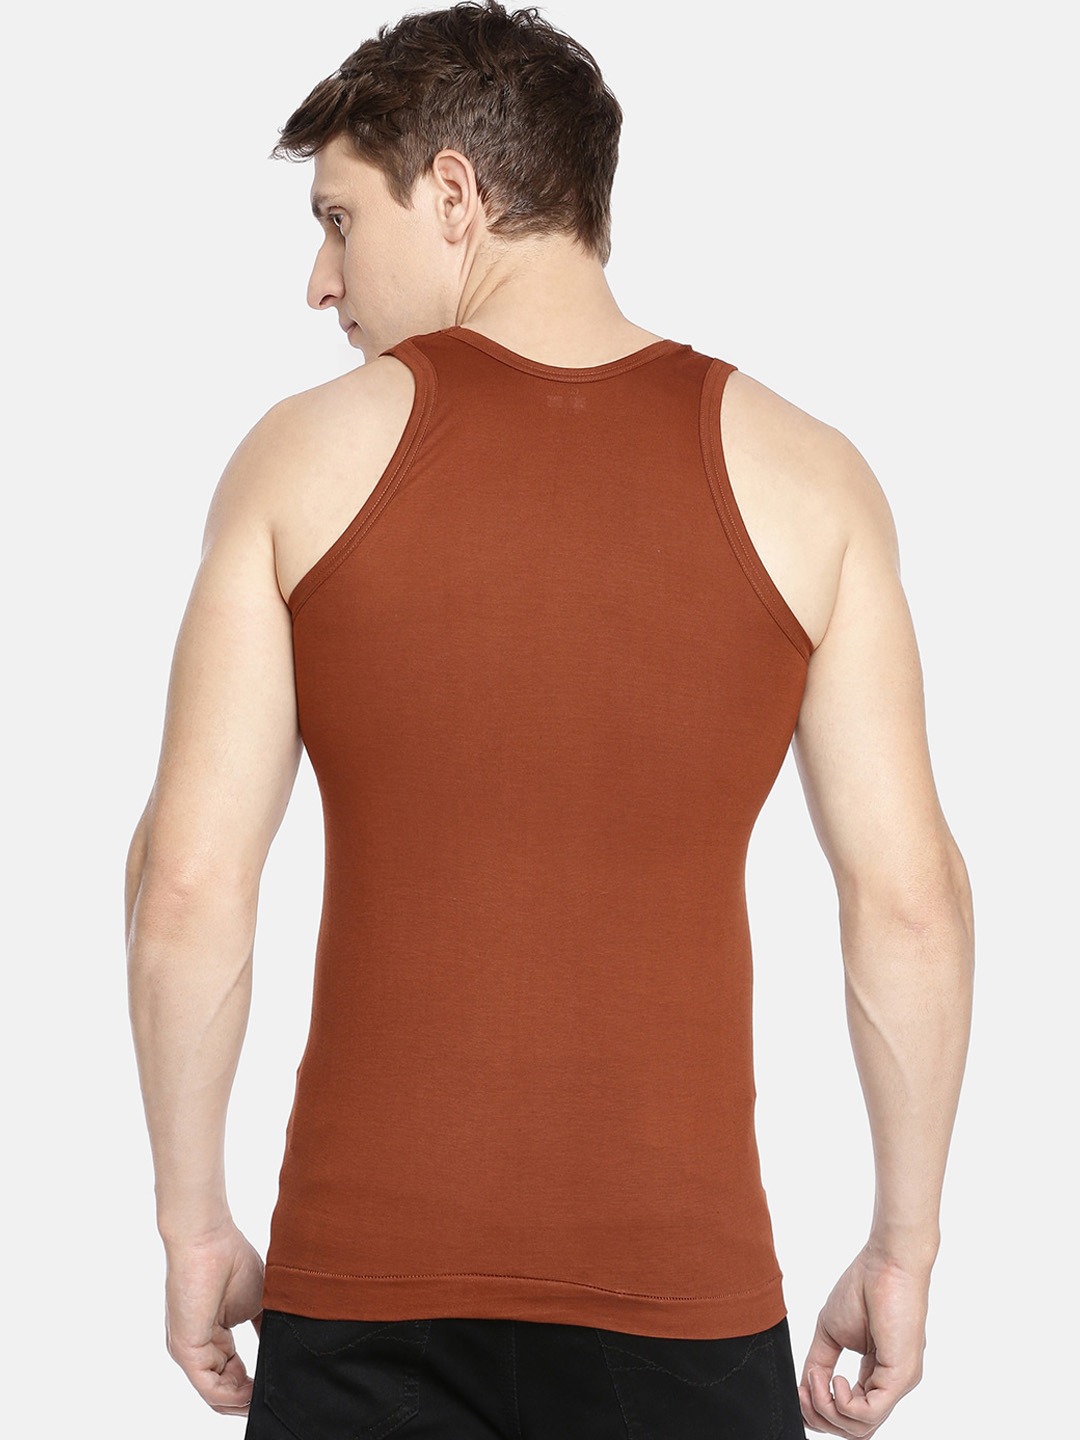 Clothing Innerwear Vests | Dollar Bigboss Men Pack Of 5 Assorted Solid Cotton Innerwear Gym Vests - PZ11443